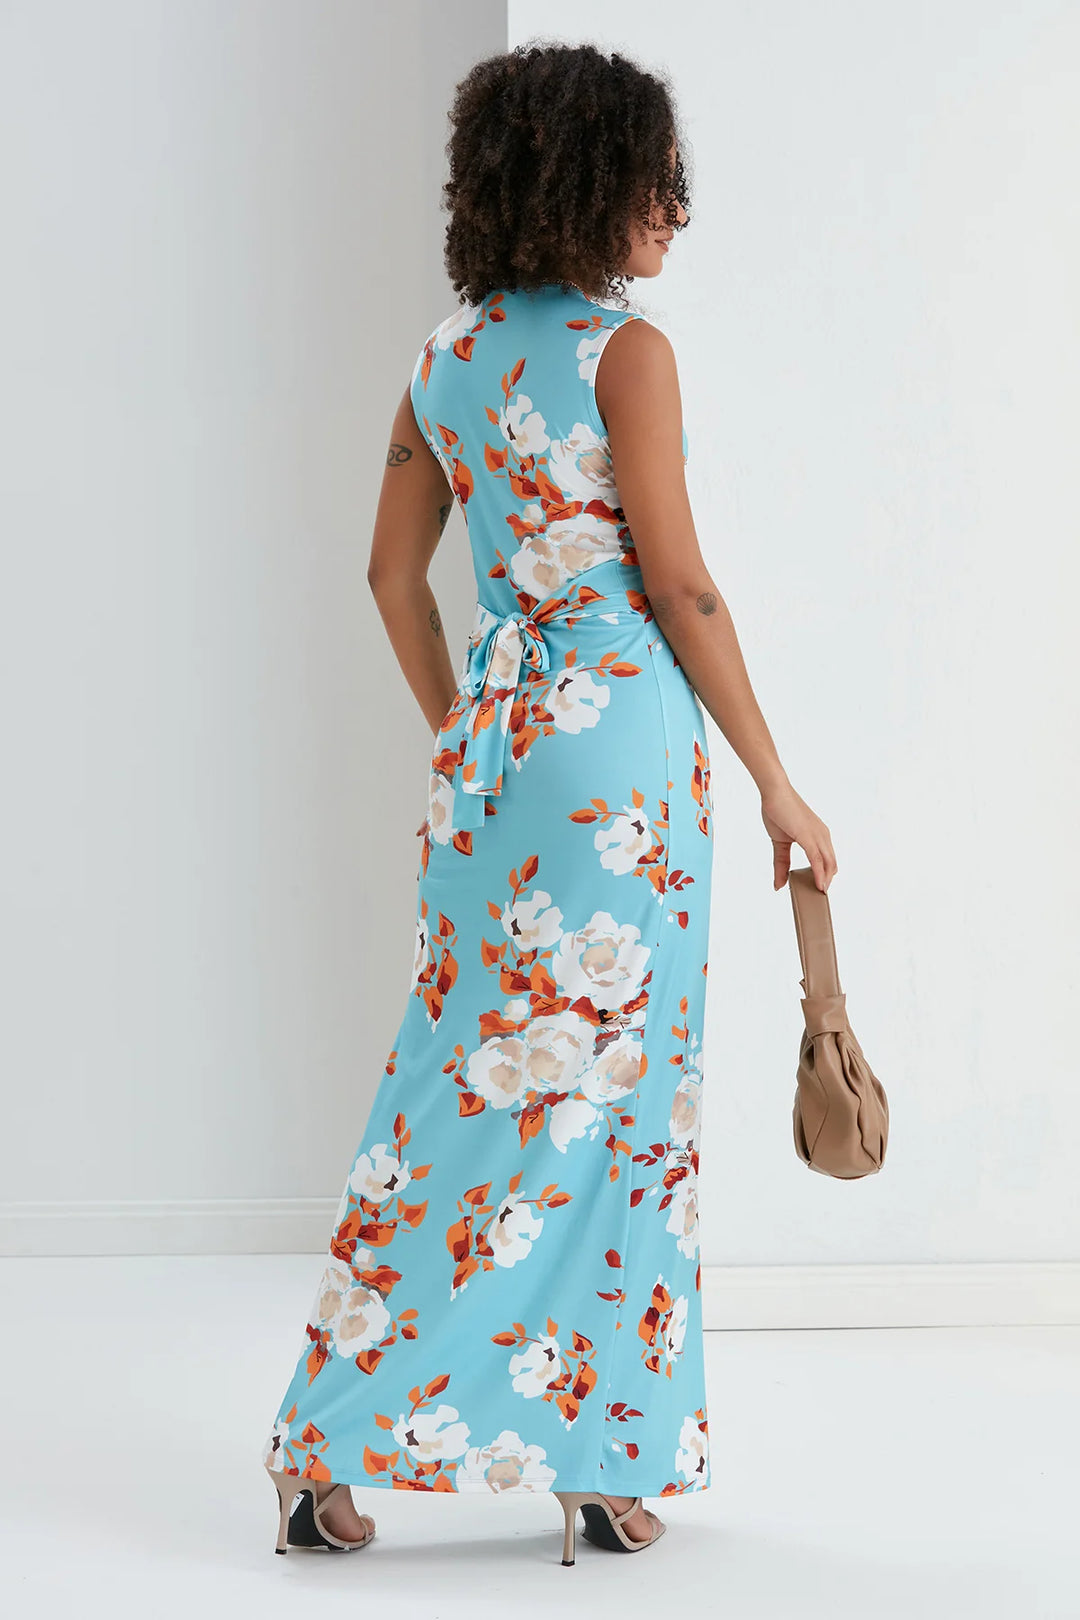 St Lucia Tall Blue Floral Sleeveless Twist Front Maxi Dress